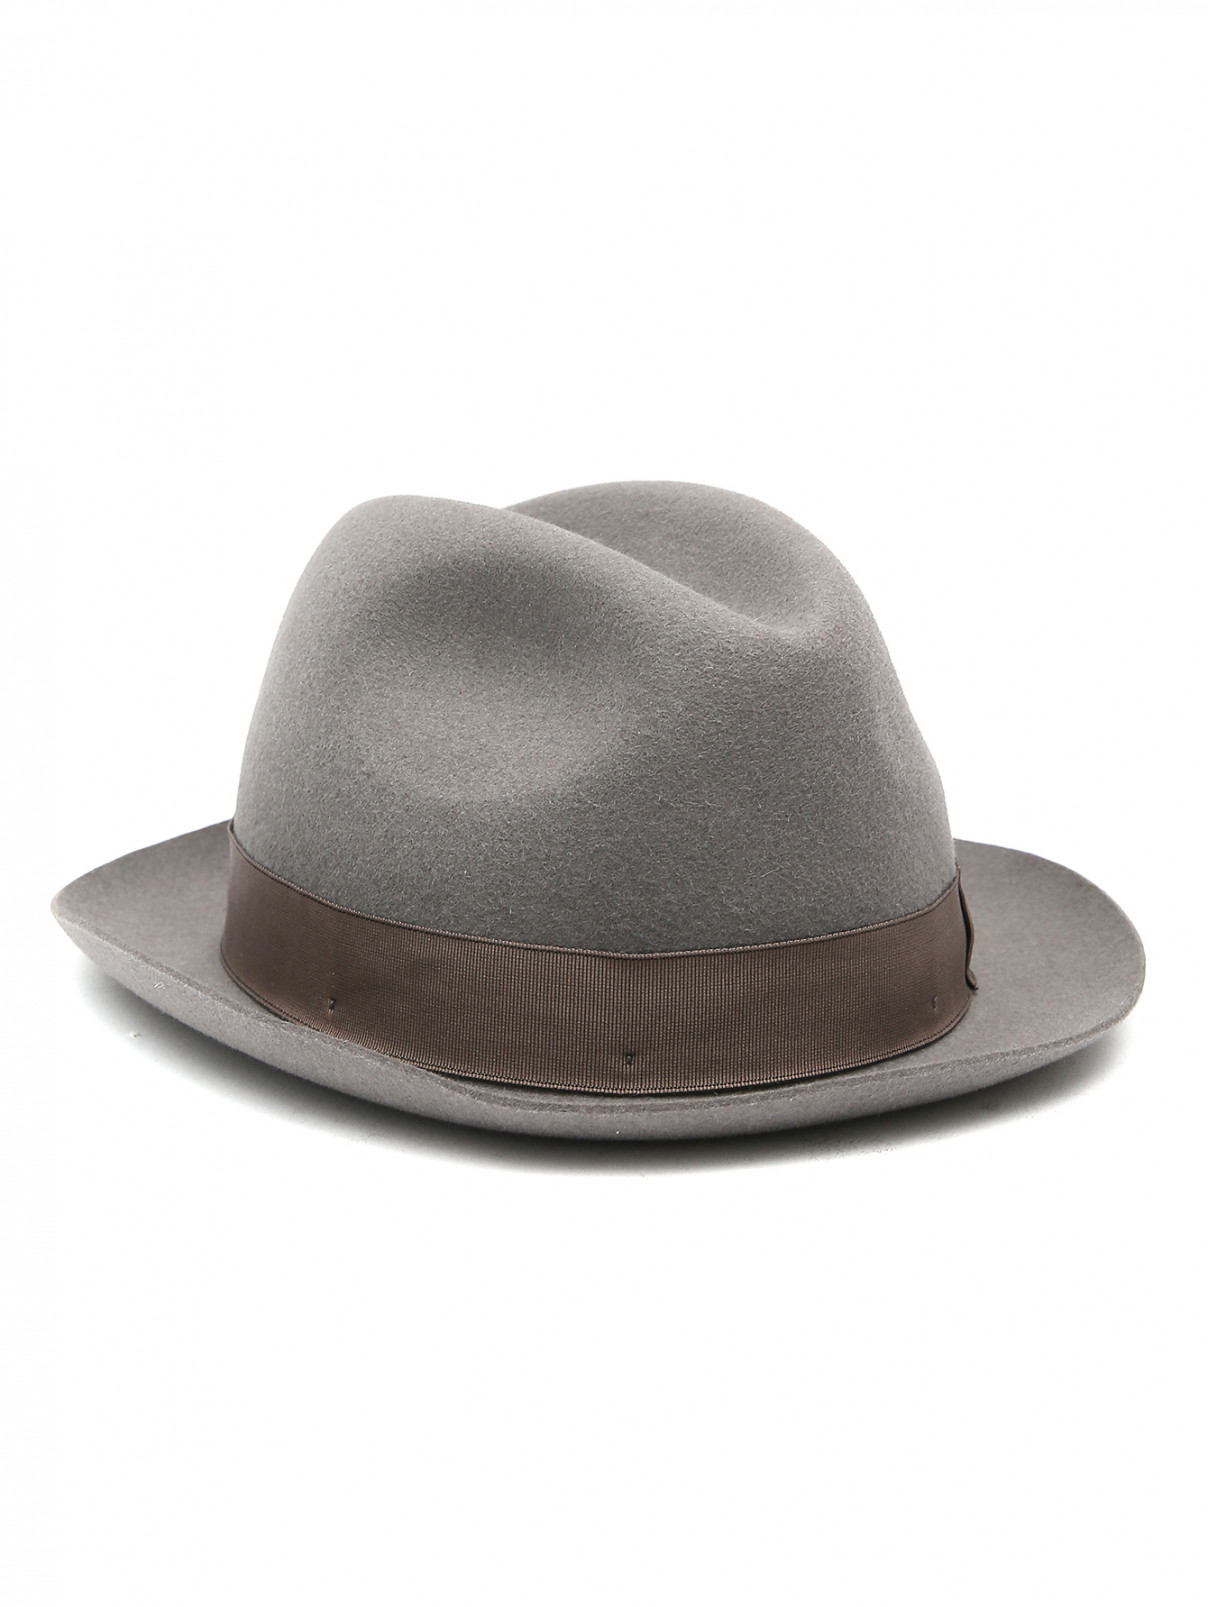 Шляпа из шерсти Borsalino  –  Общий вид  – Цвет:  Серый